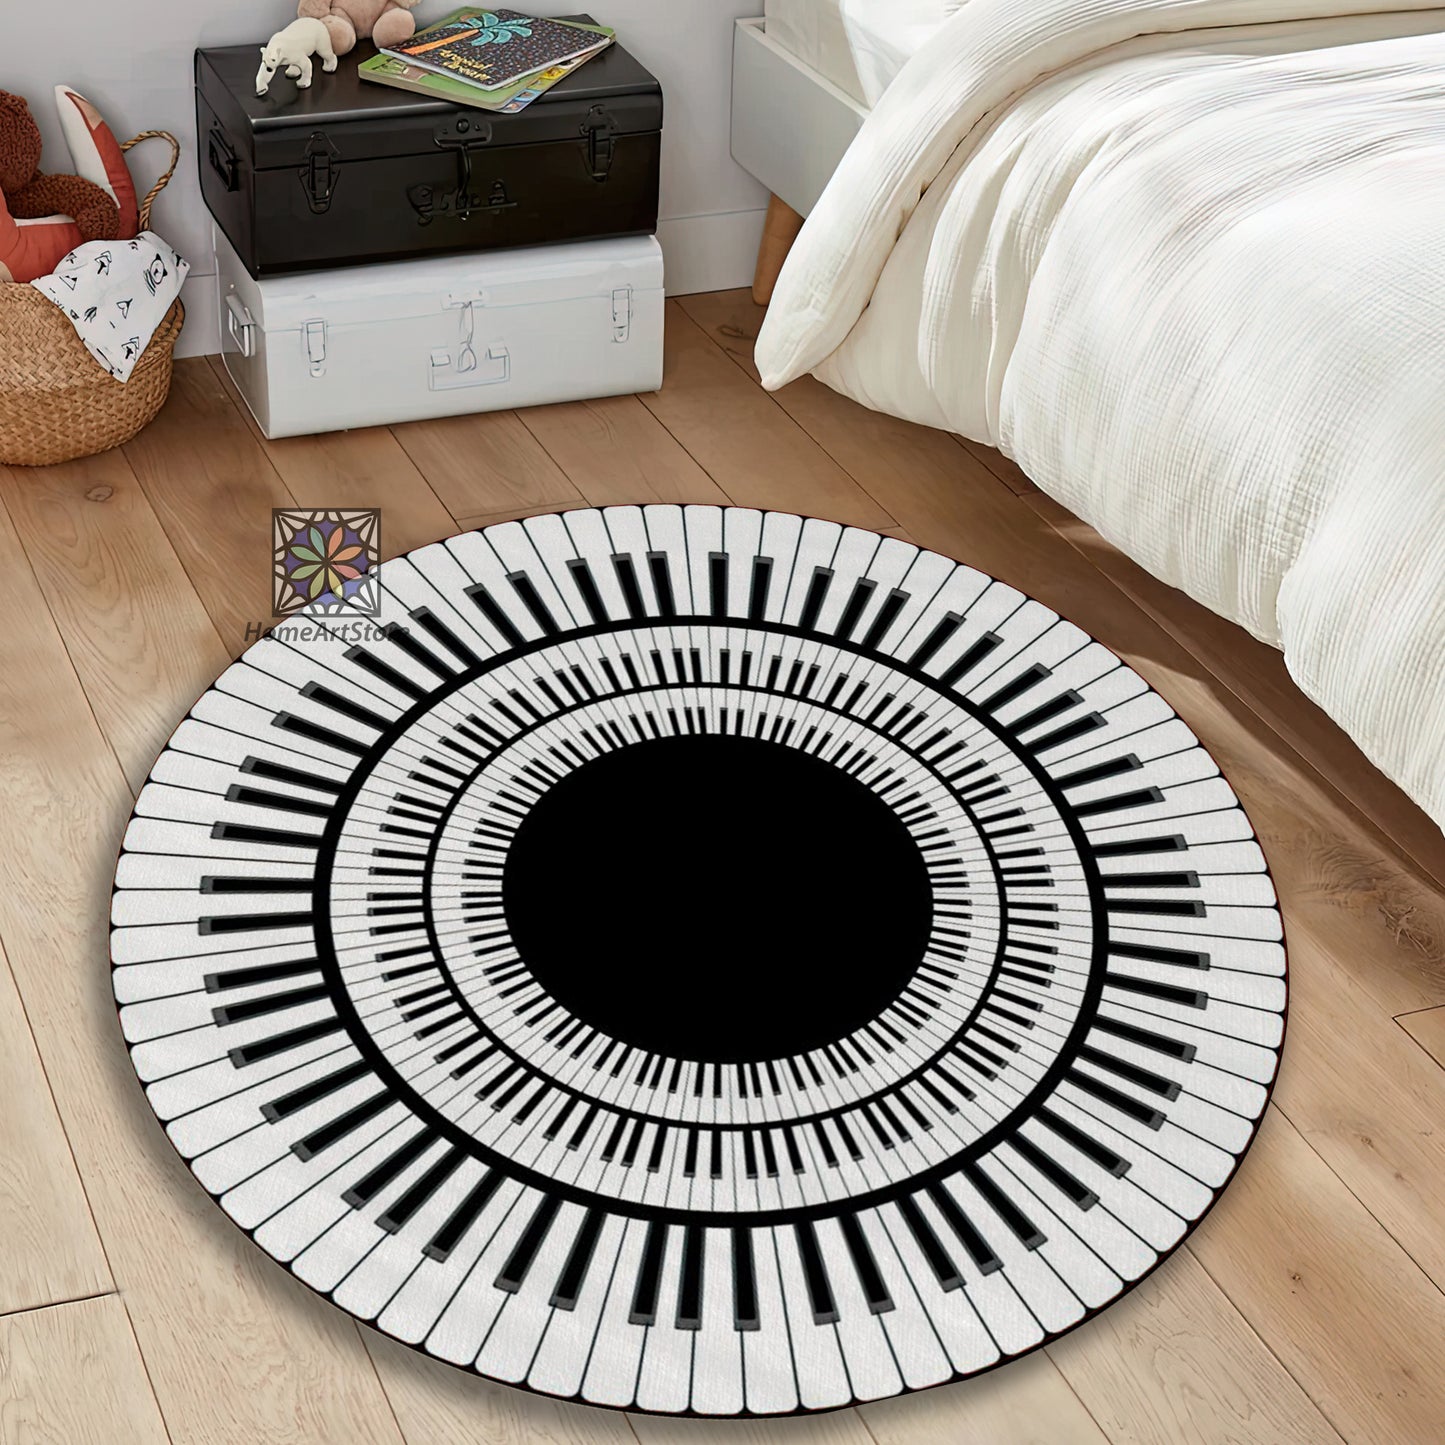 Piano Keyboard Rug, Musical Art Round Mat, Music Notes Floor Mat, Music Room Carpet